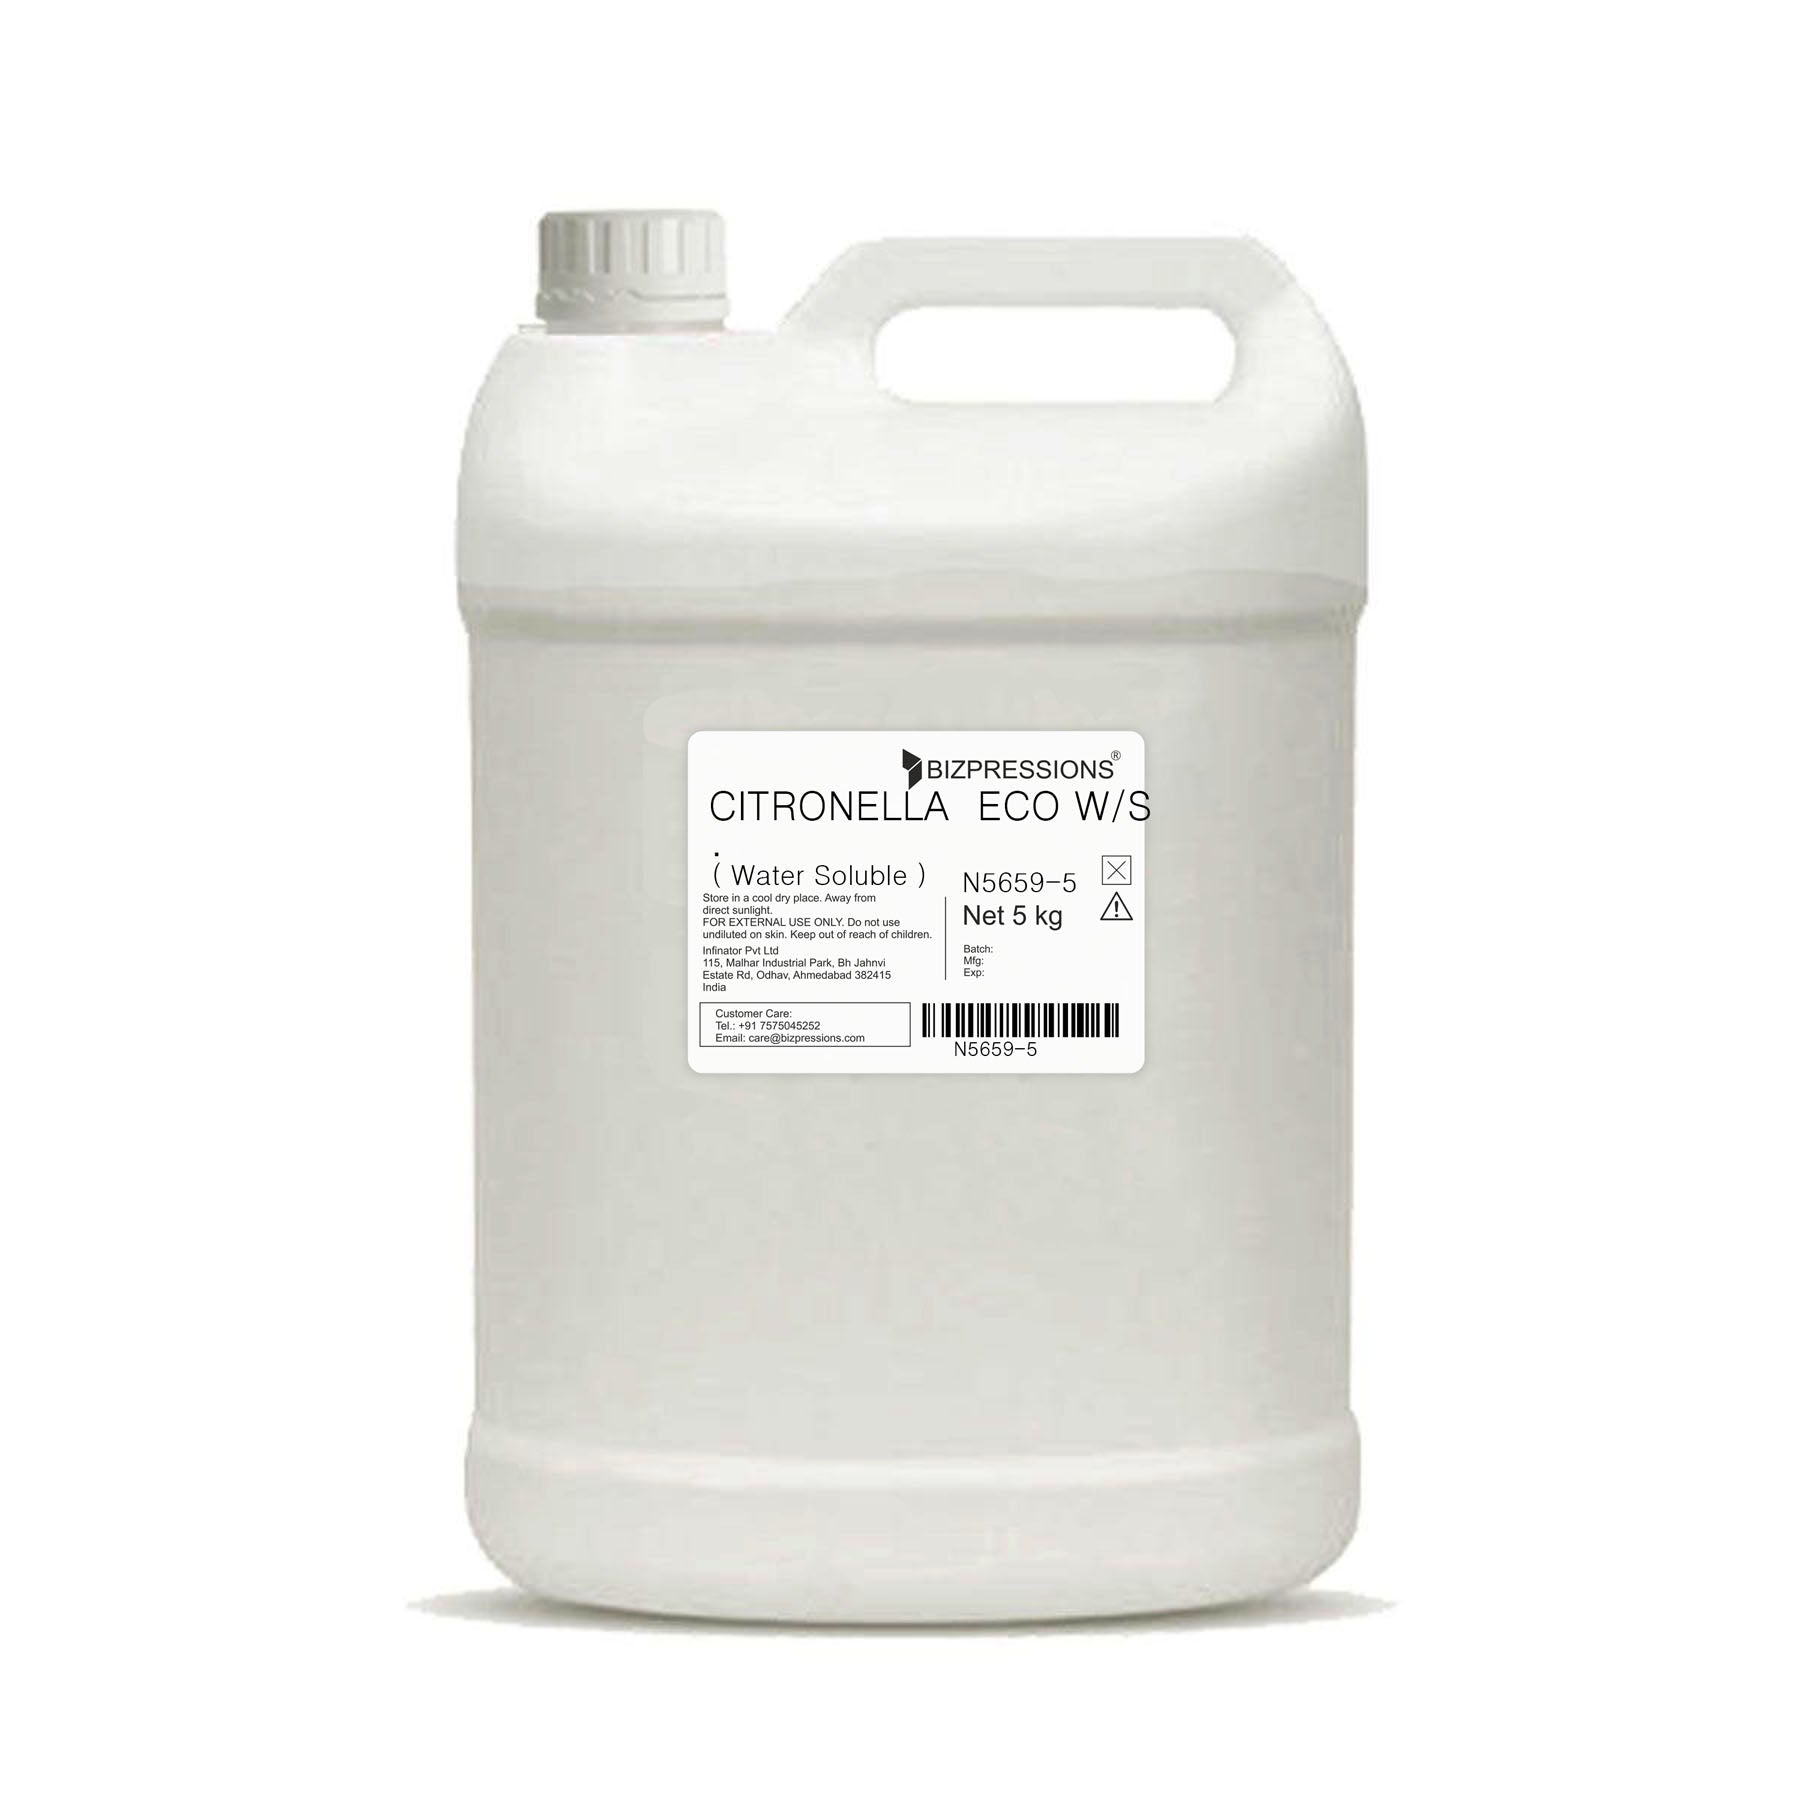 CITRONELLA ECO W/S - Fragrance ( Water Soluble ) - 5 kg